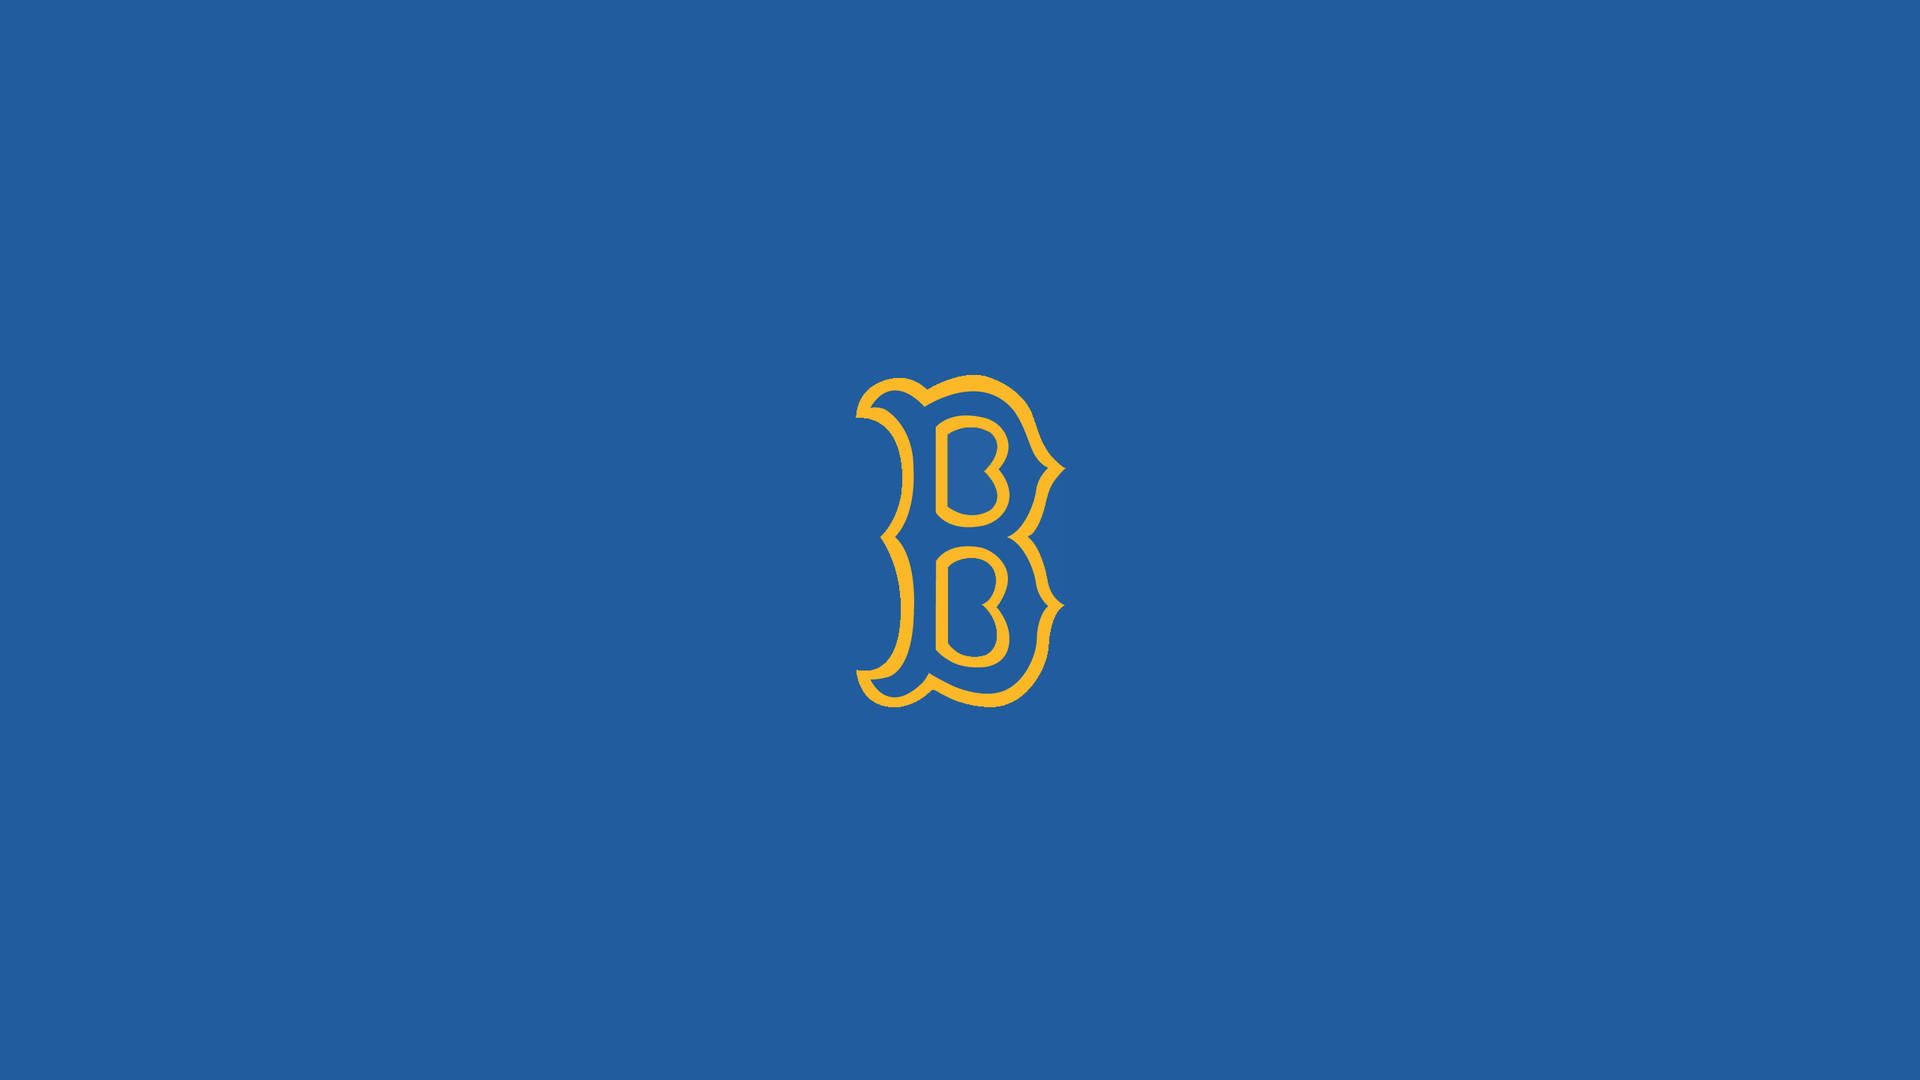 UCLA Bruins Logo and Motto Wallpaper